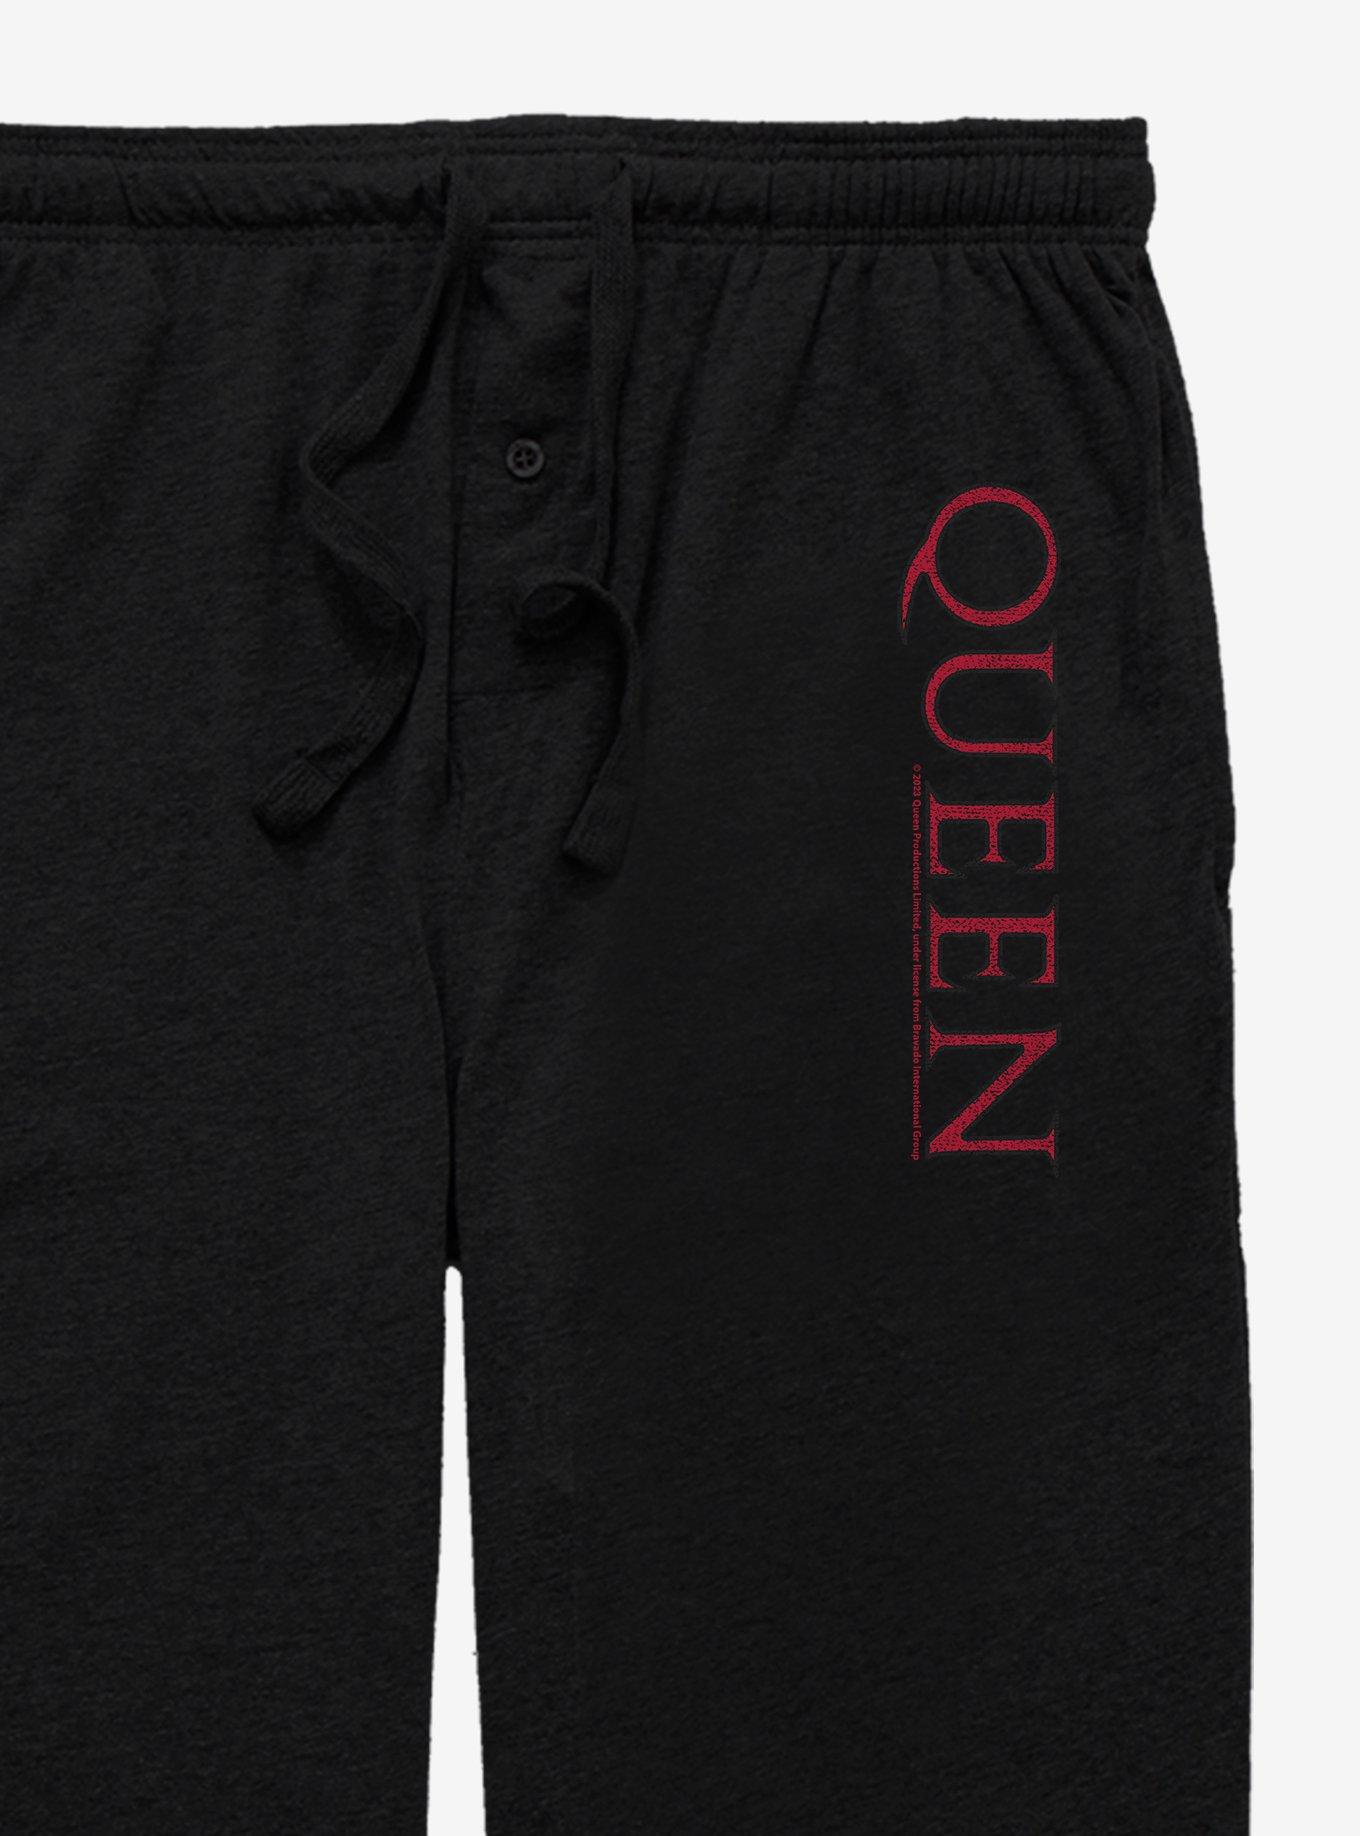 Queen Band Logo Pajama Pants, BLACK, alternate